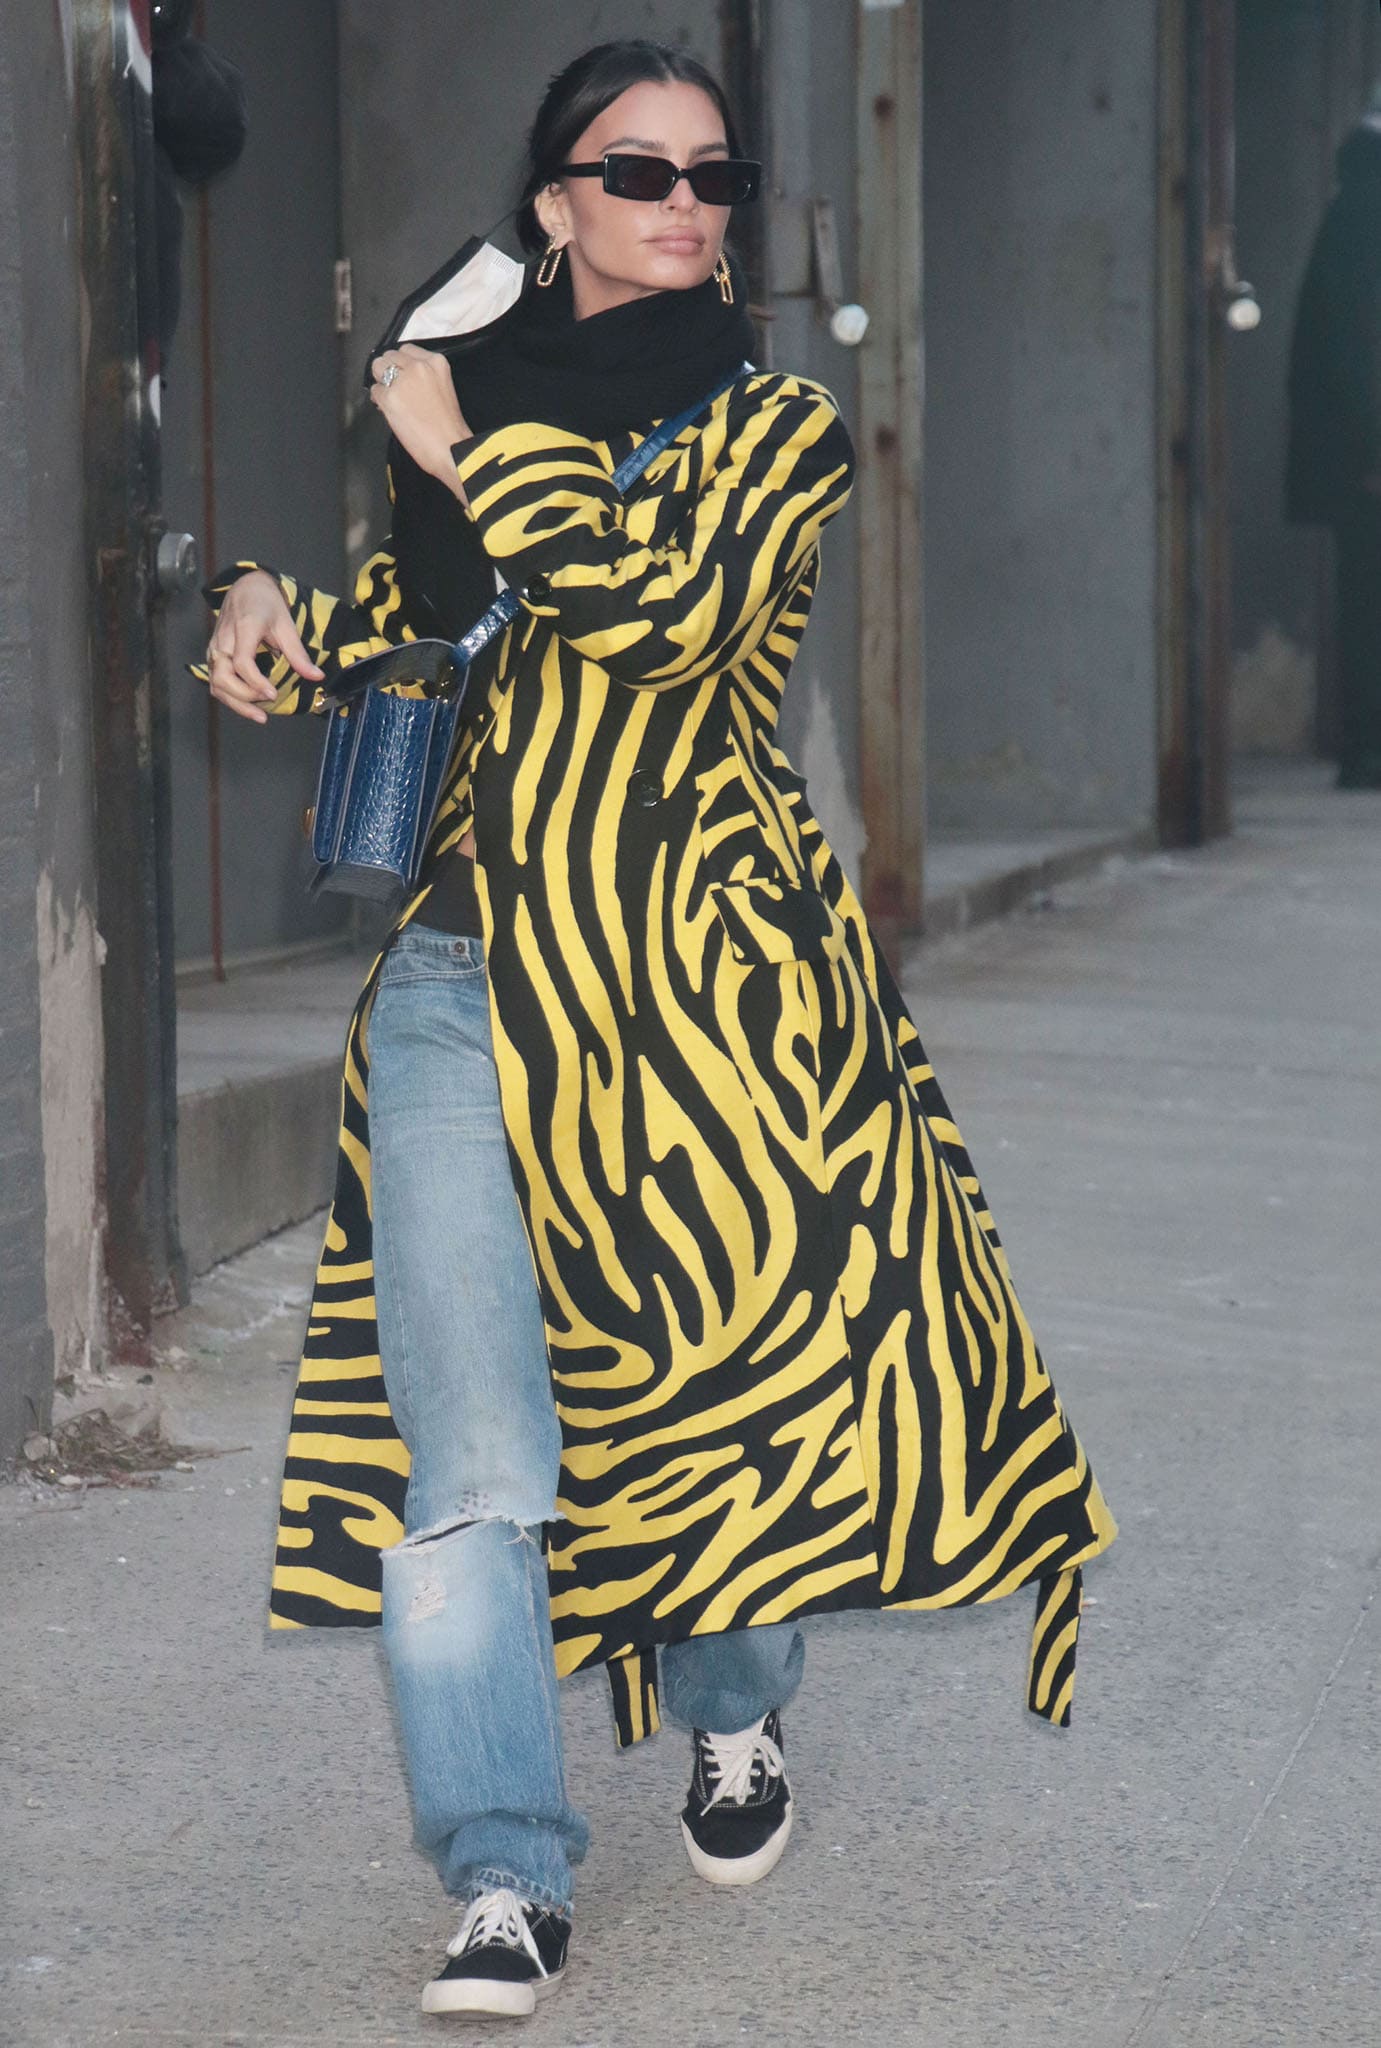 Emily Ratajkowski is unmissable in a yellow and black zebra-print coat from Proenza Schouler